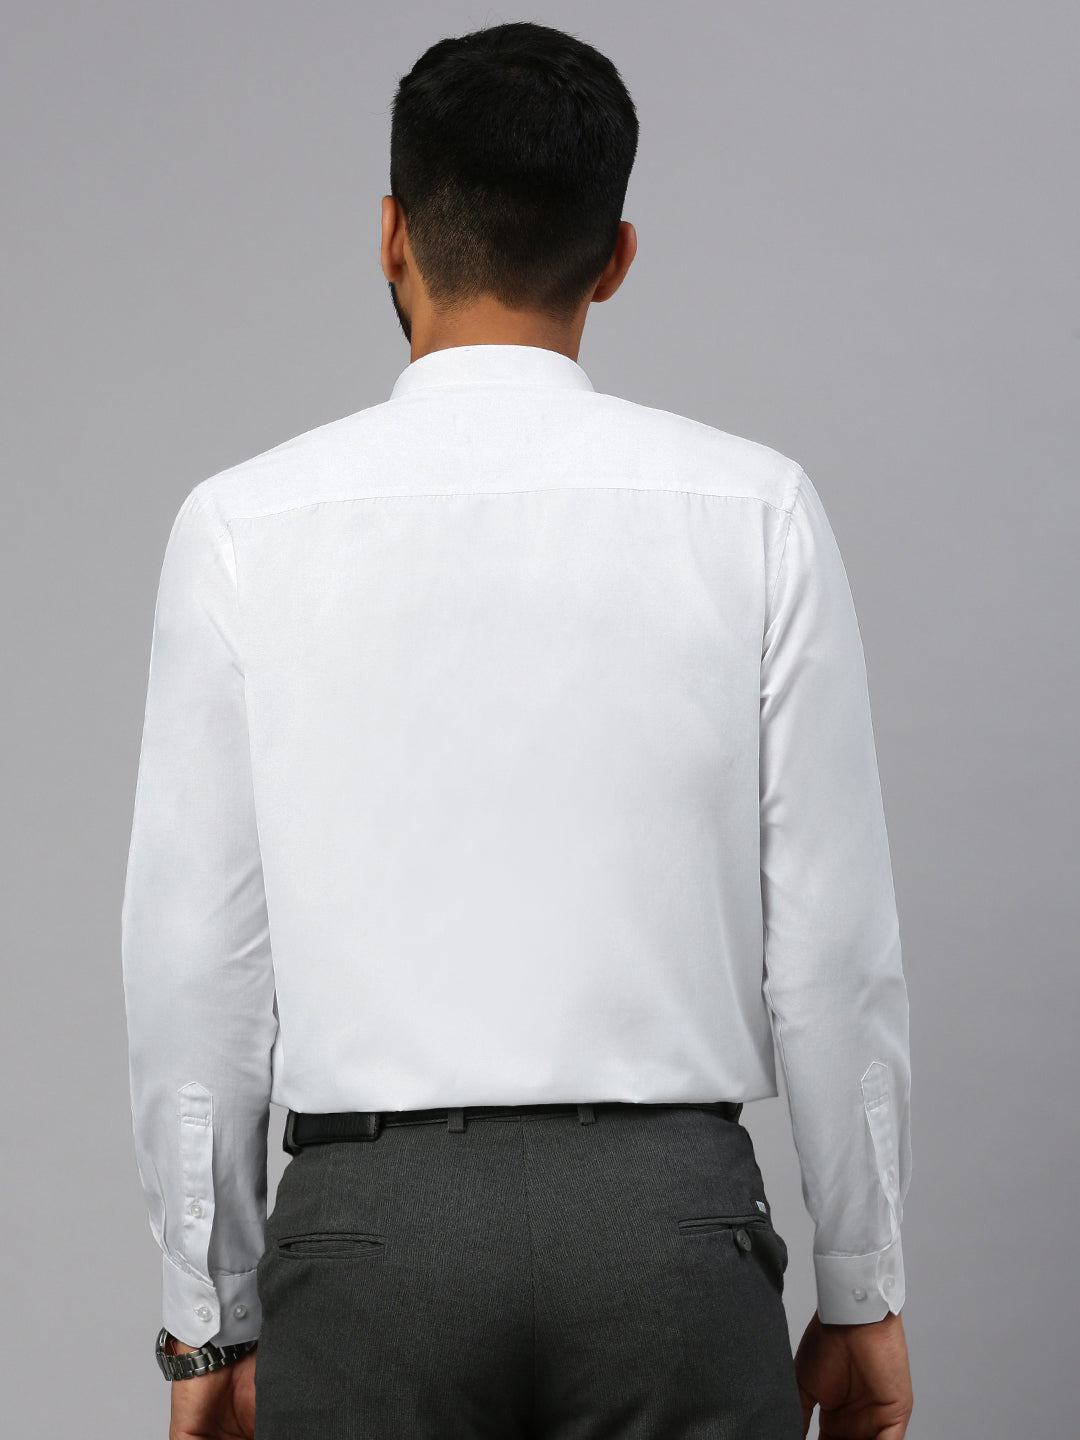 Mens Smart Fit Poly Cotton White Shirt Full Sleeves White Mark